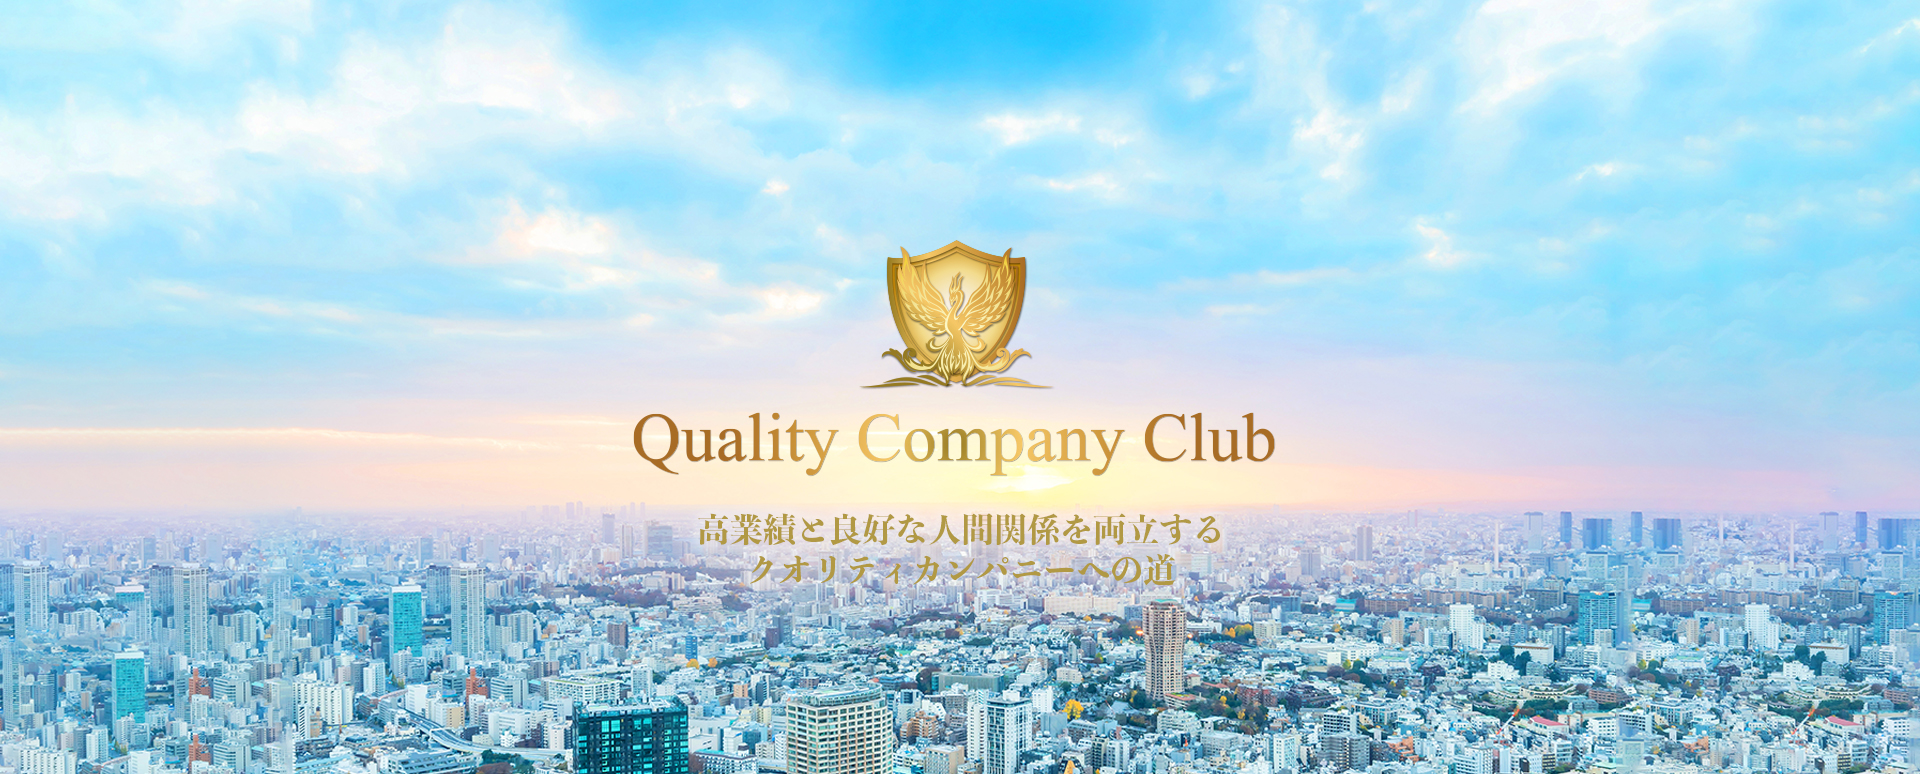 Qulity Company Club